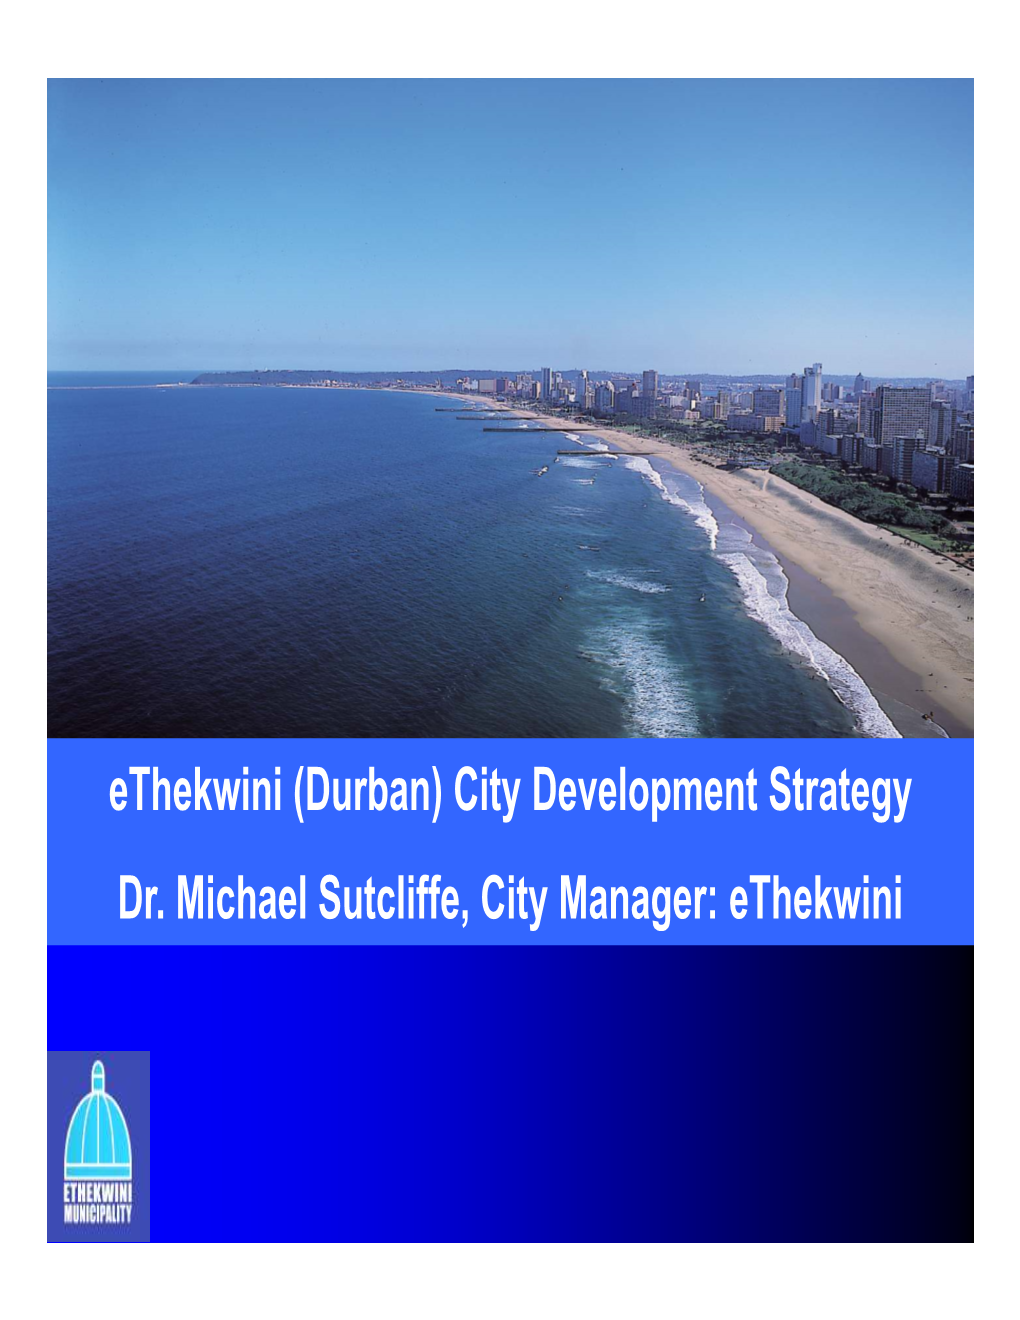 Ethekwini (Durban) City Development Strategy Dr. Michael Sutcliffe, City Manager: Ethekwini Did You Know!!!! Ethekwini Vision